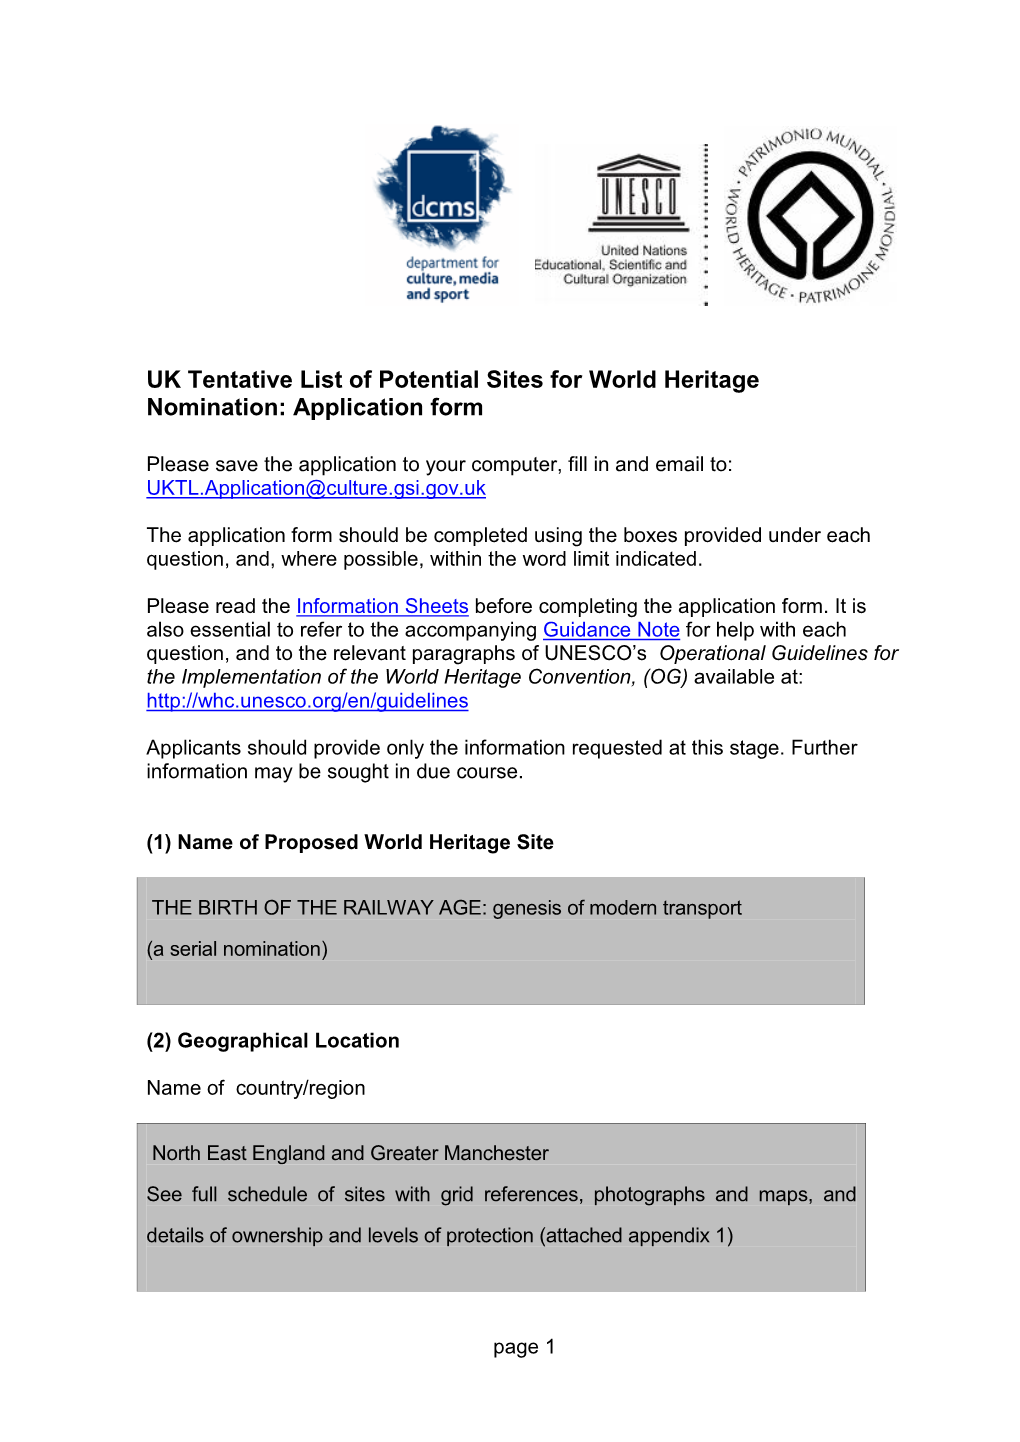 UK Tentative List of Potential Sites for World Heritage Nomination: Application Form